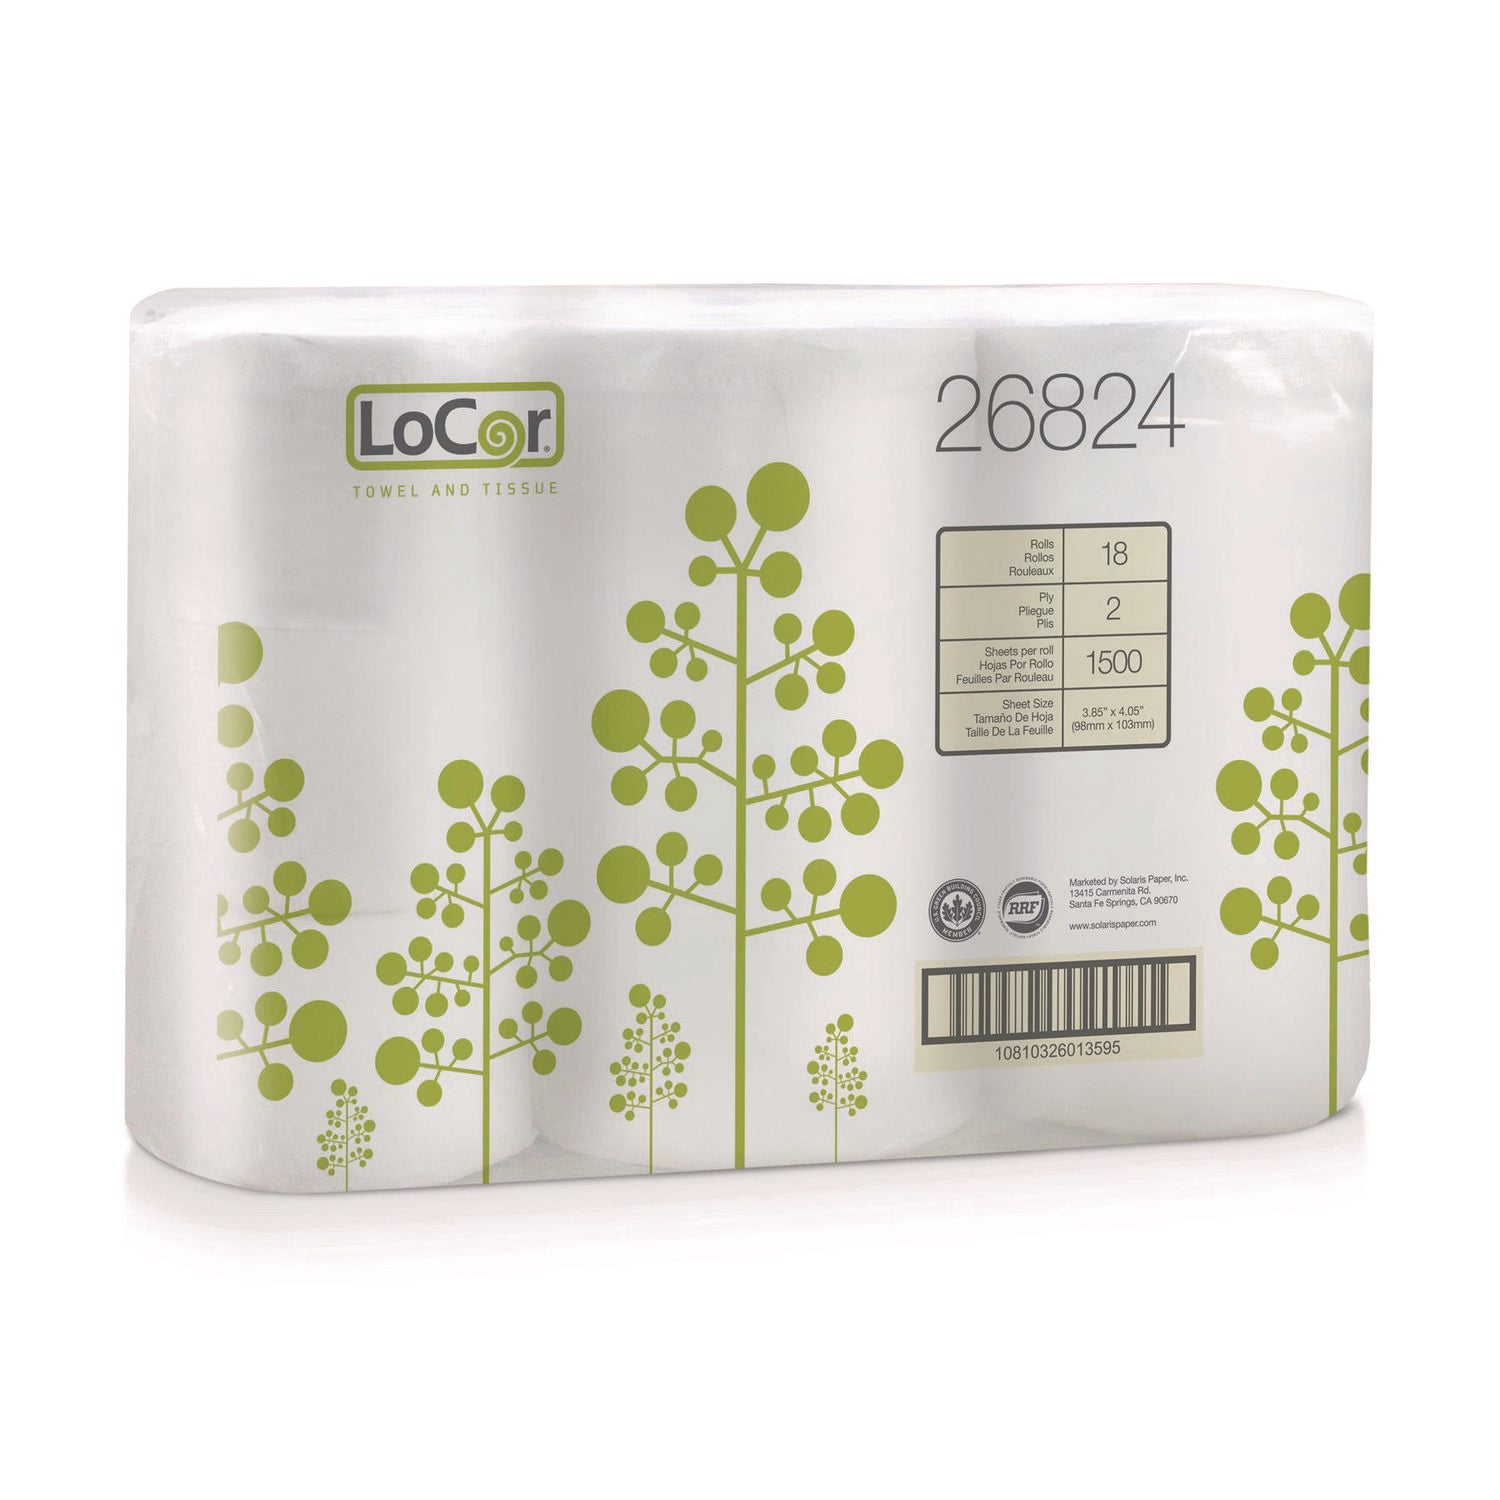 LoCor Bath Tissue - 2 Ply - 3.85" x 4.05" - 1500 Sheets/Roll - White - Fiber - Eco-friendly, Soft - For Hand - 18 / Carton - 2